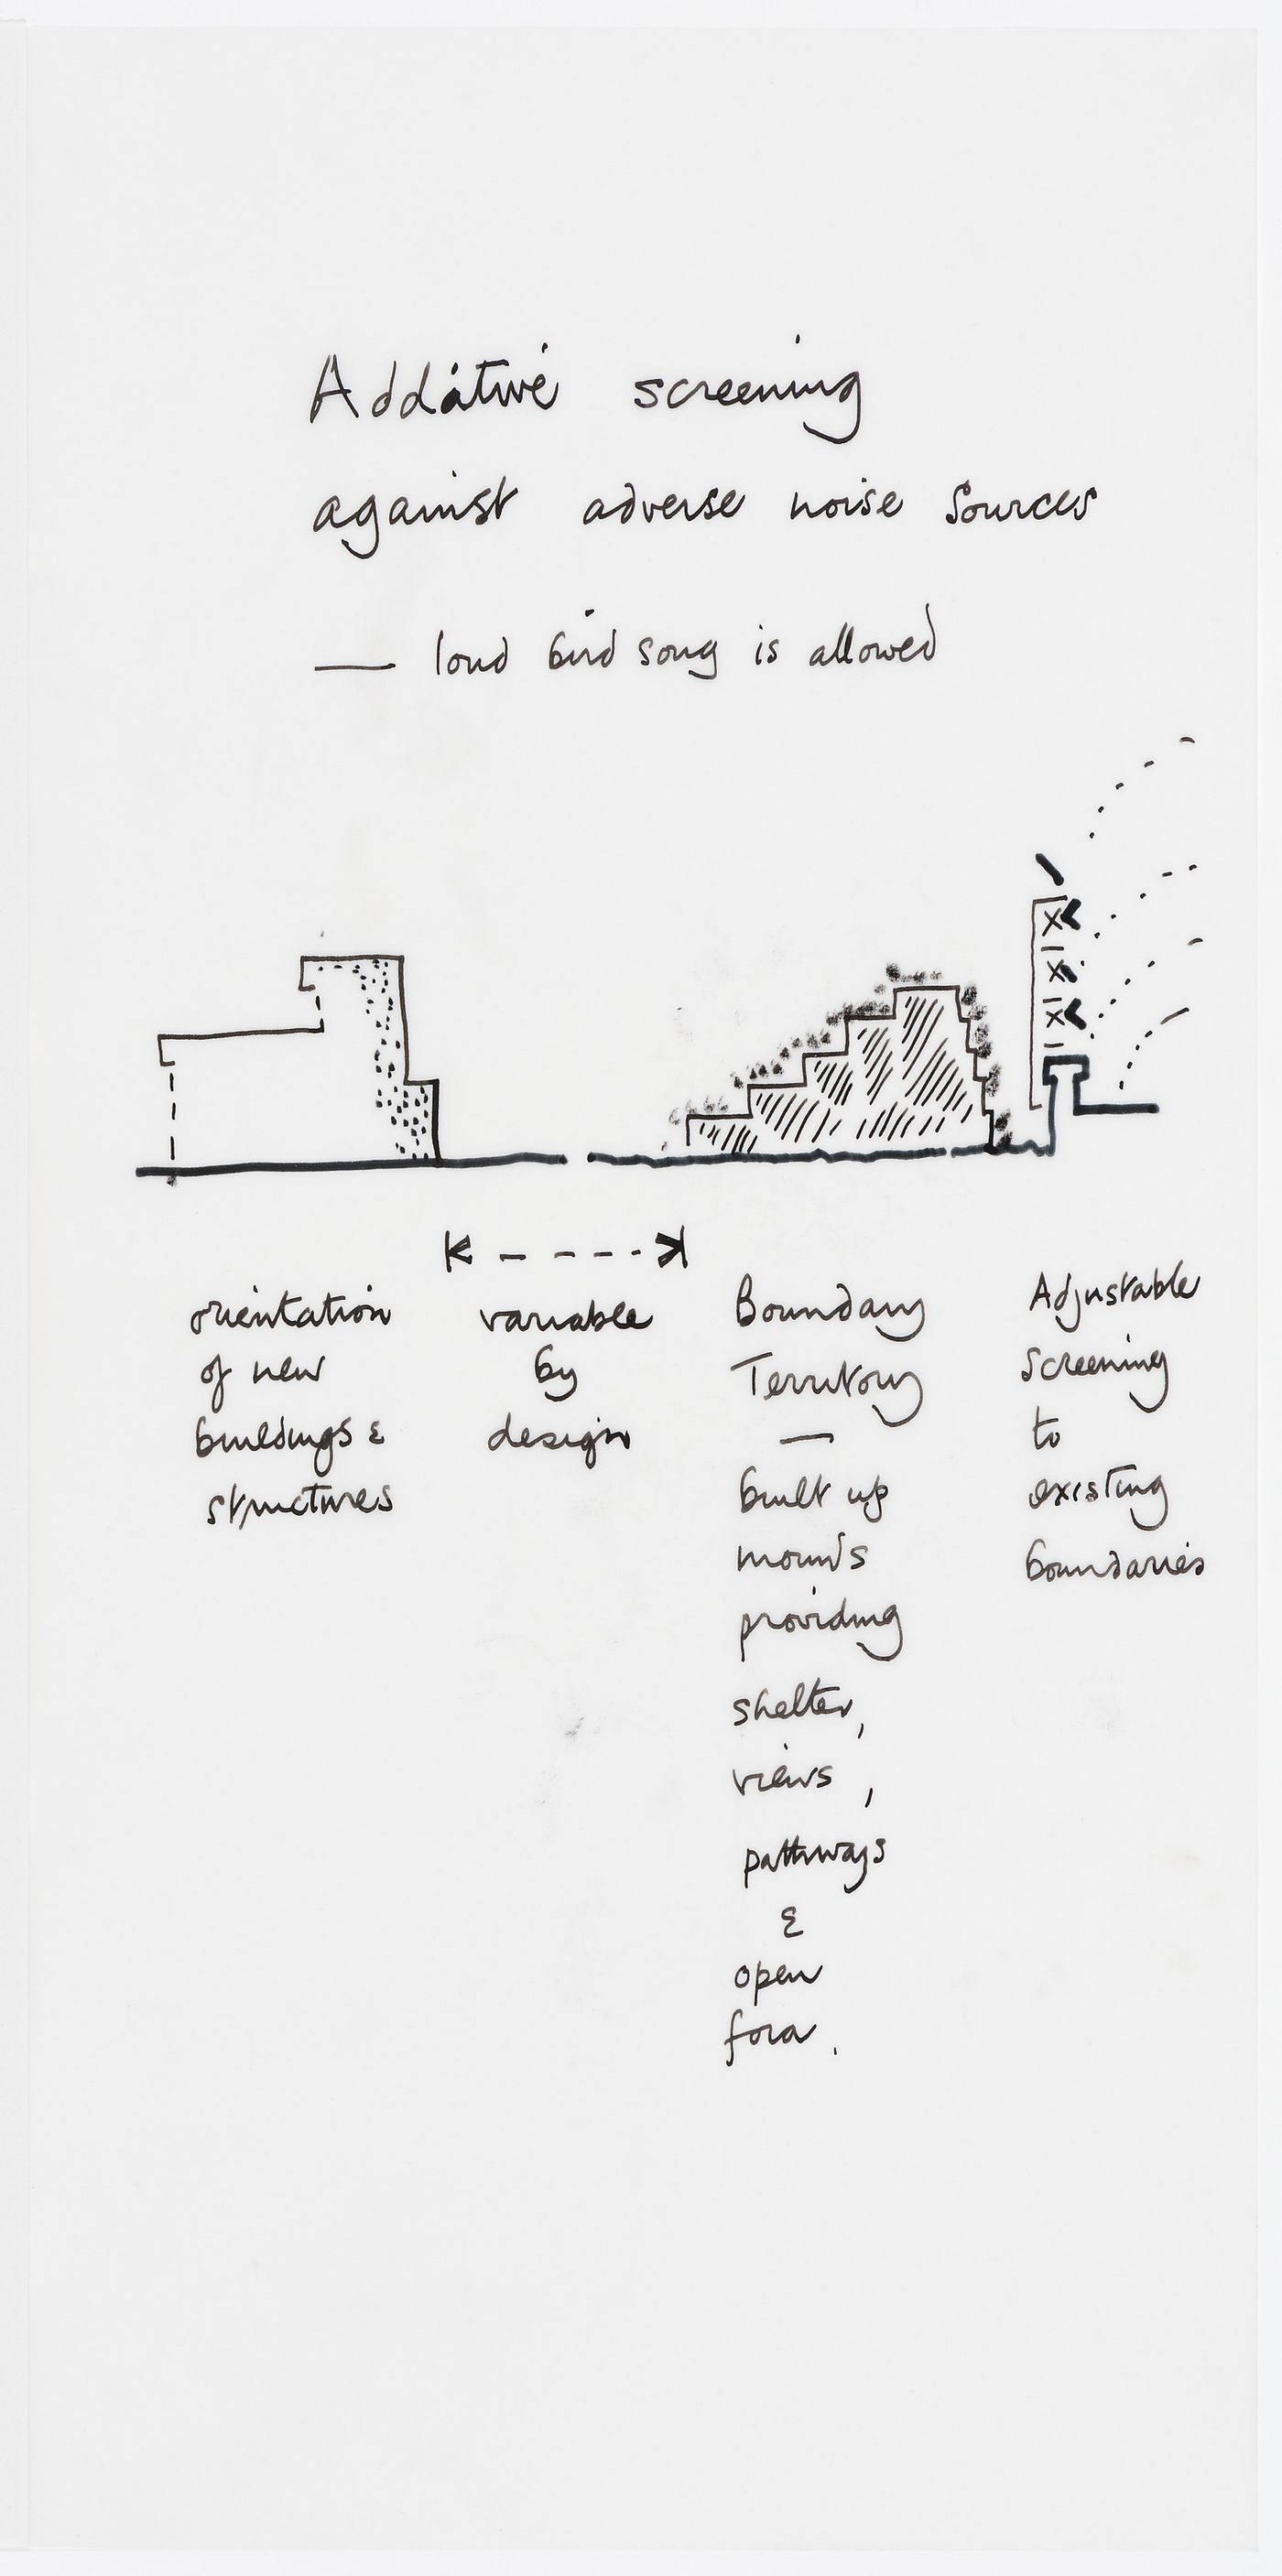 Concours international, Parc de la Villette, Paris: entry by Cedric Price: text with diagram illustrating additive screening